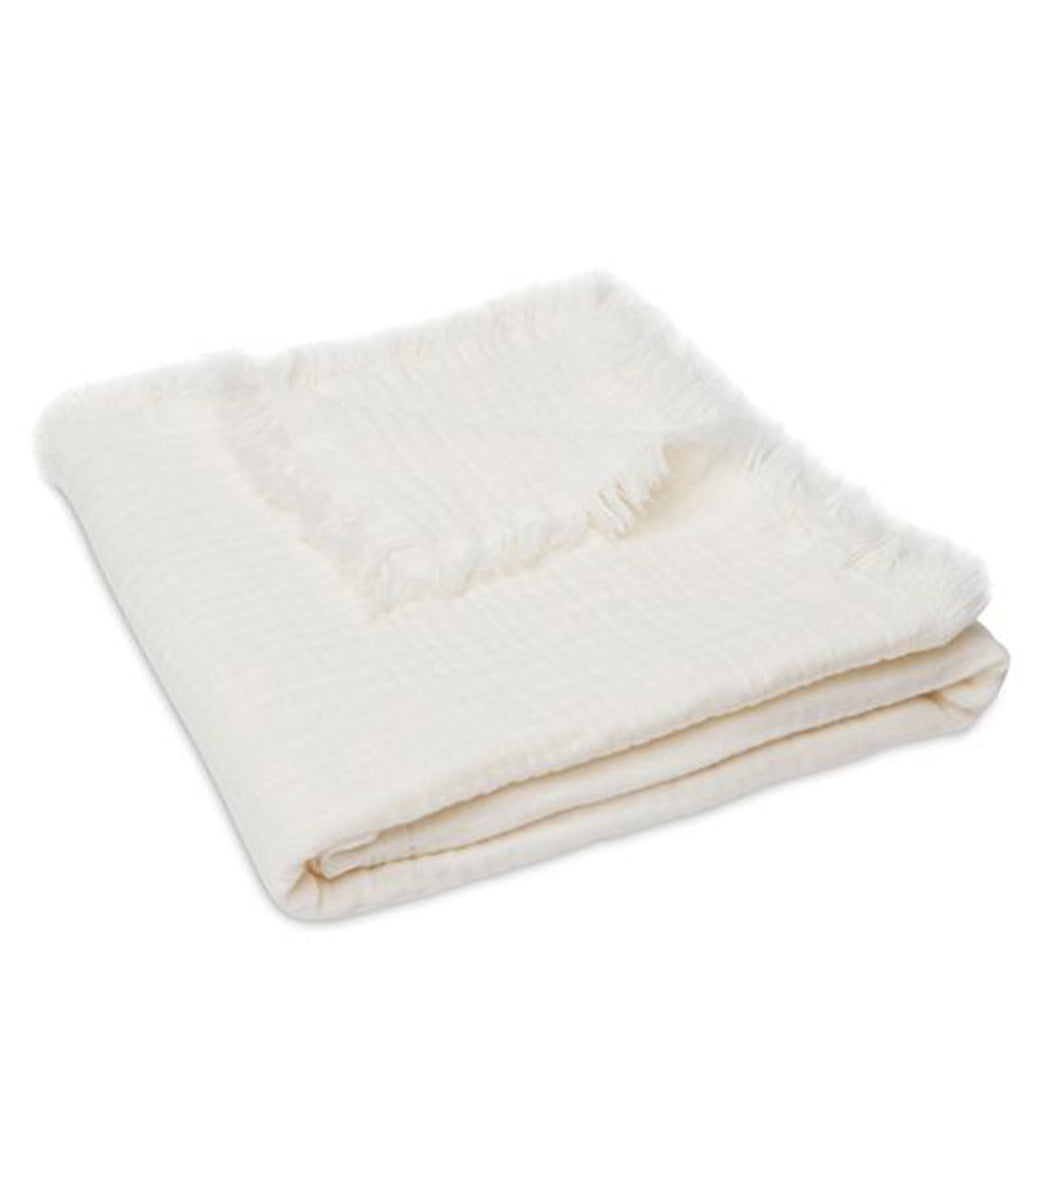 Blanket // Muslin fringe - Ivory